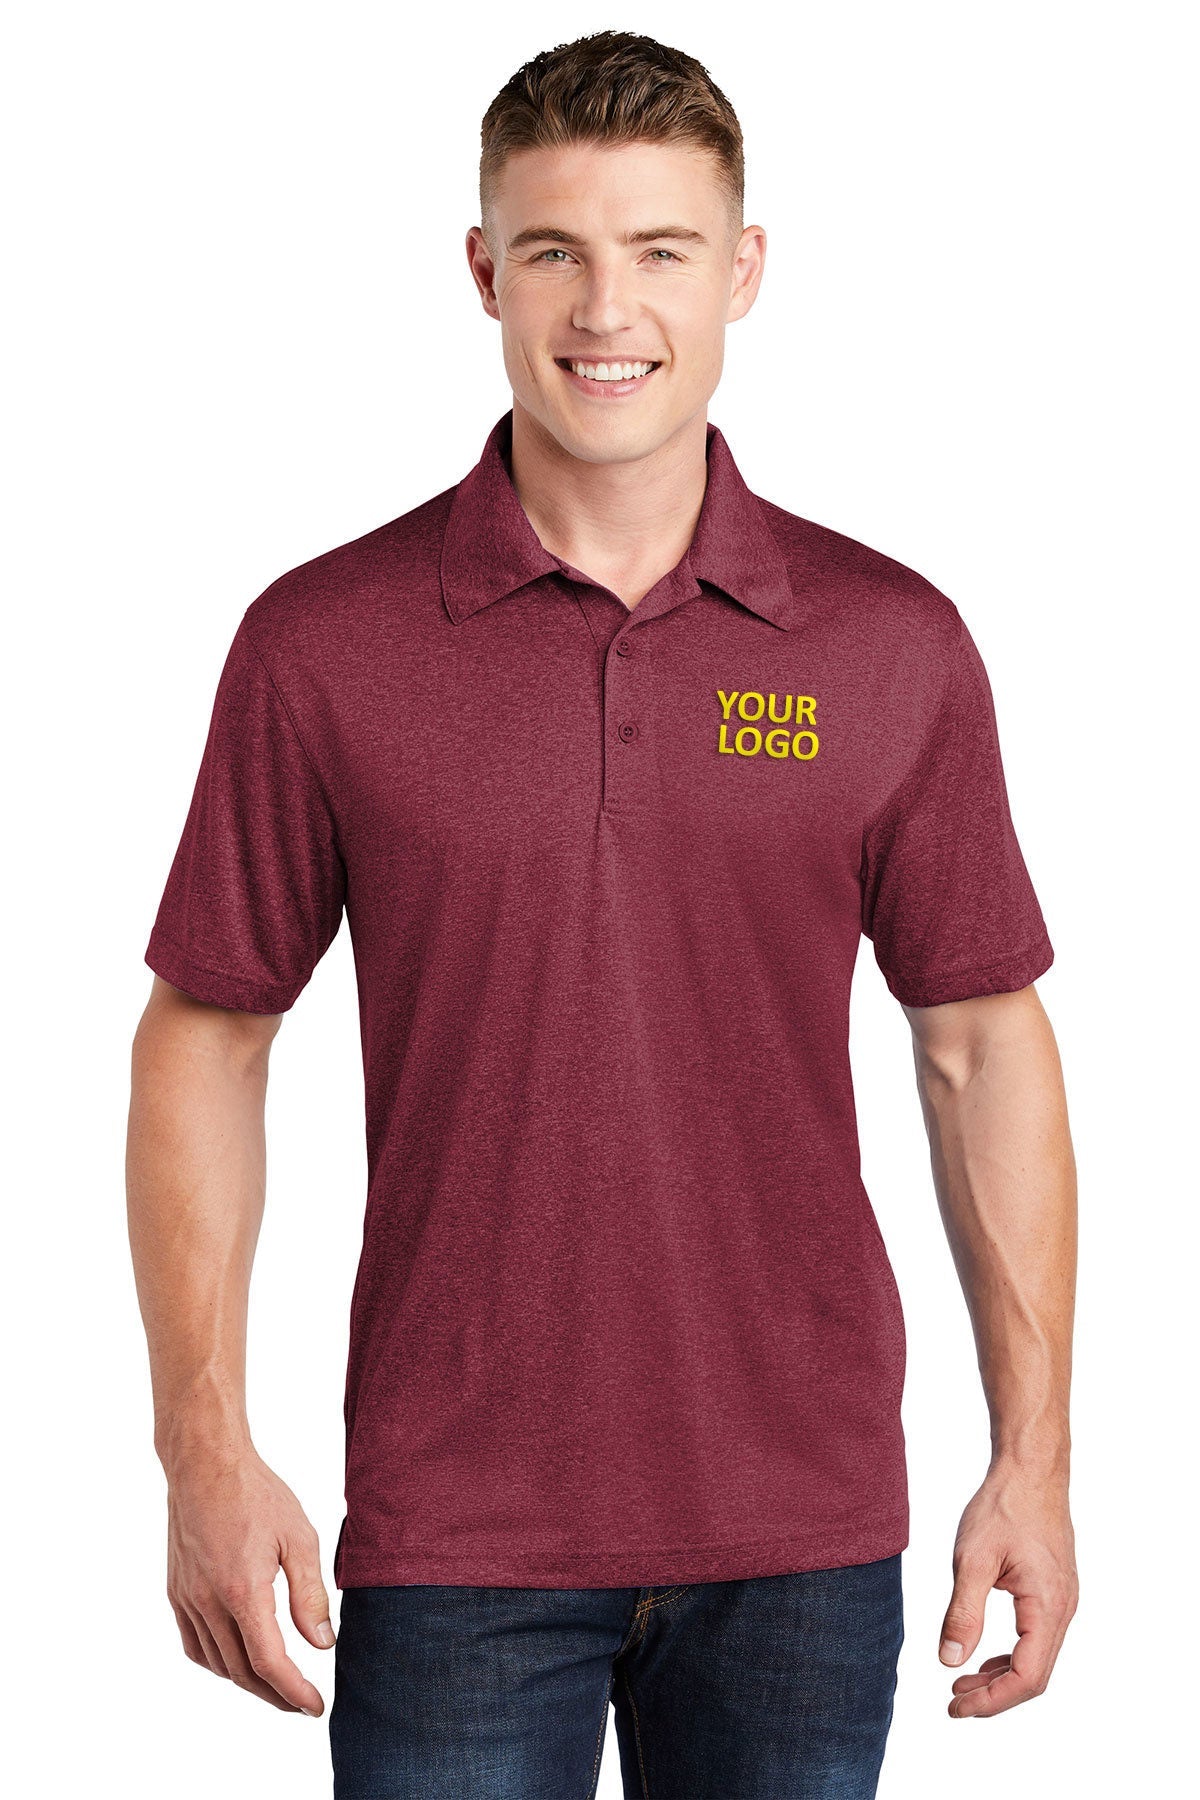 Sport-Tek Cardinal Heather ST660 polo work shirts with company logo